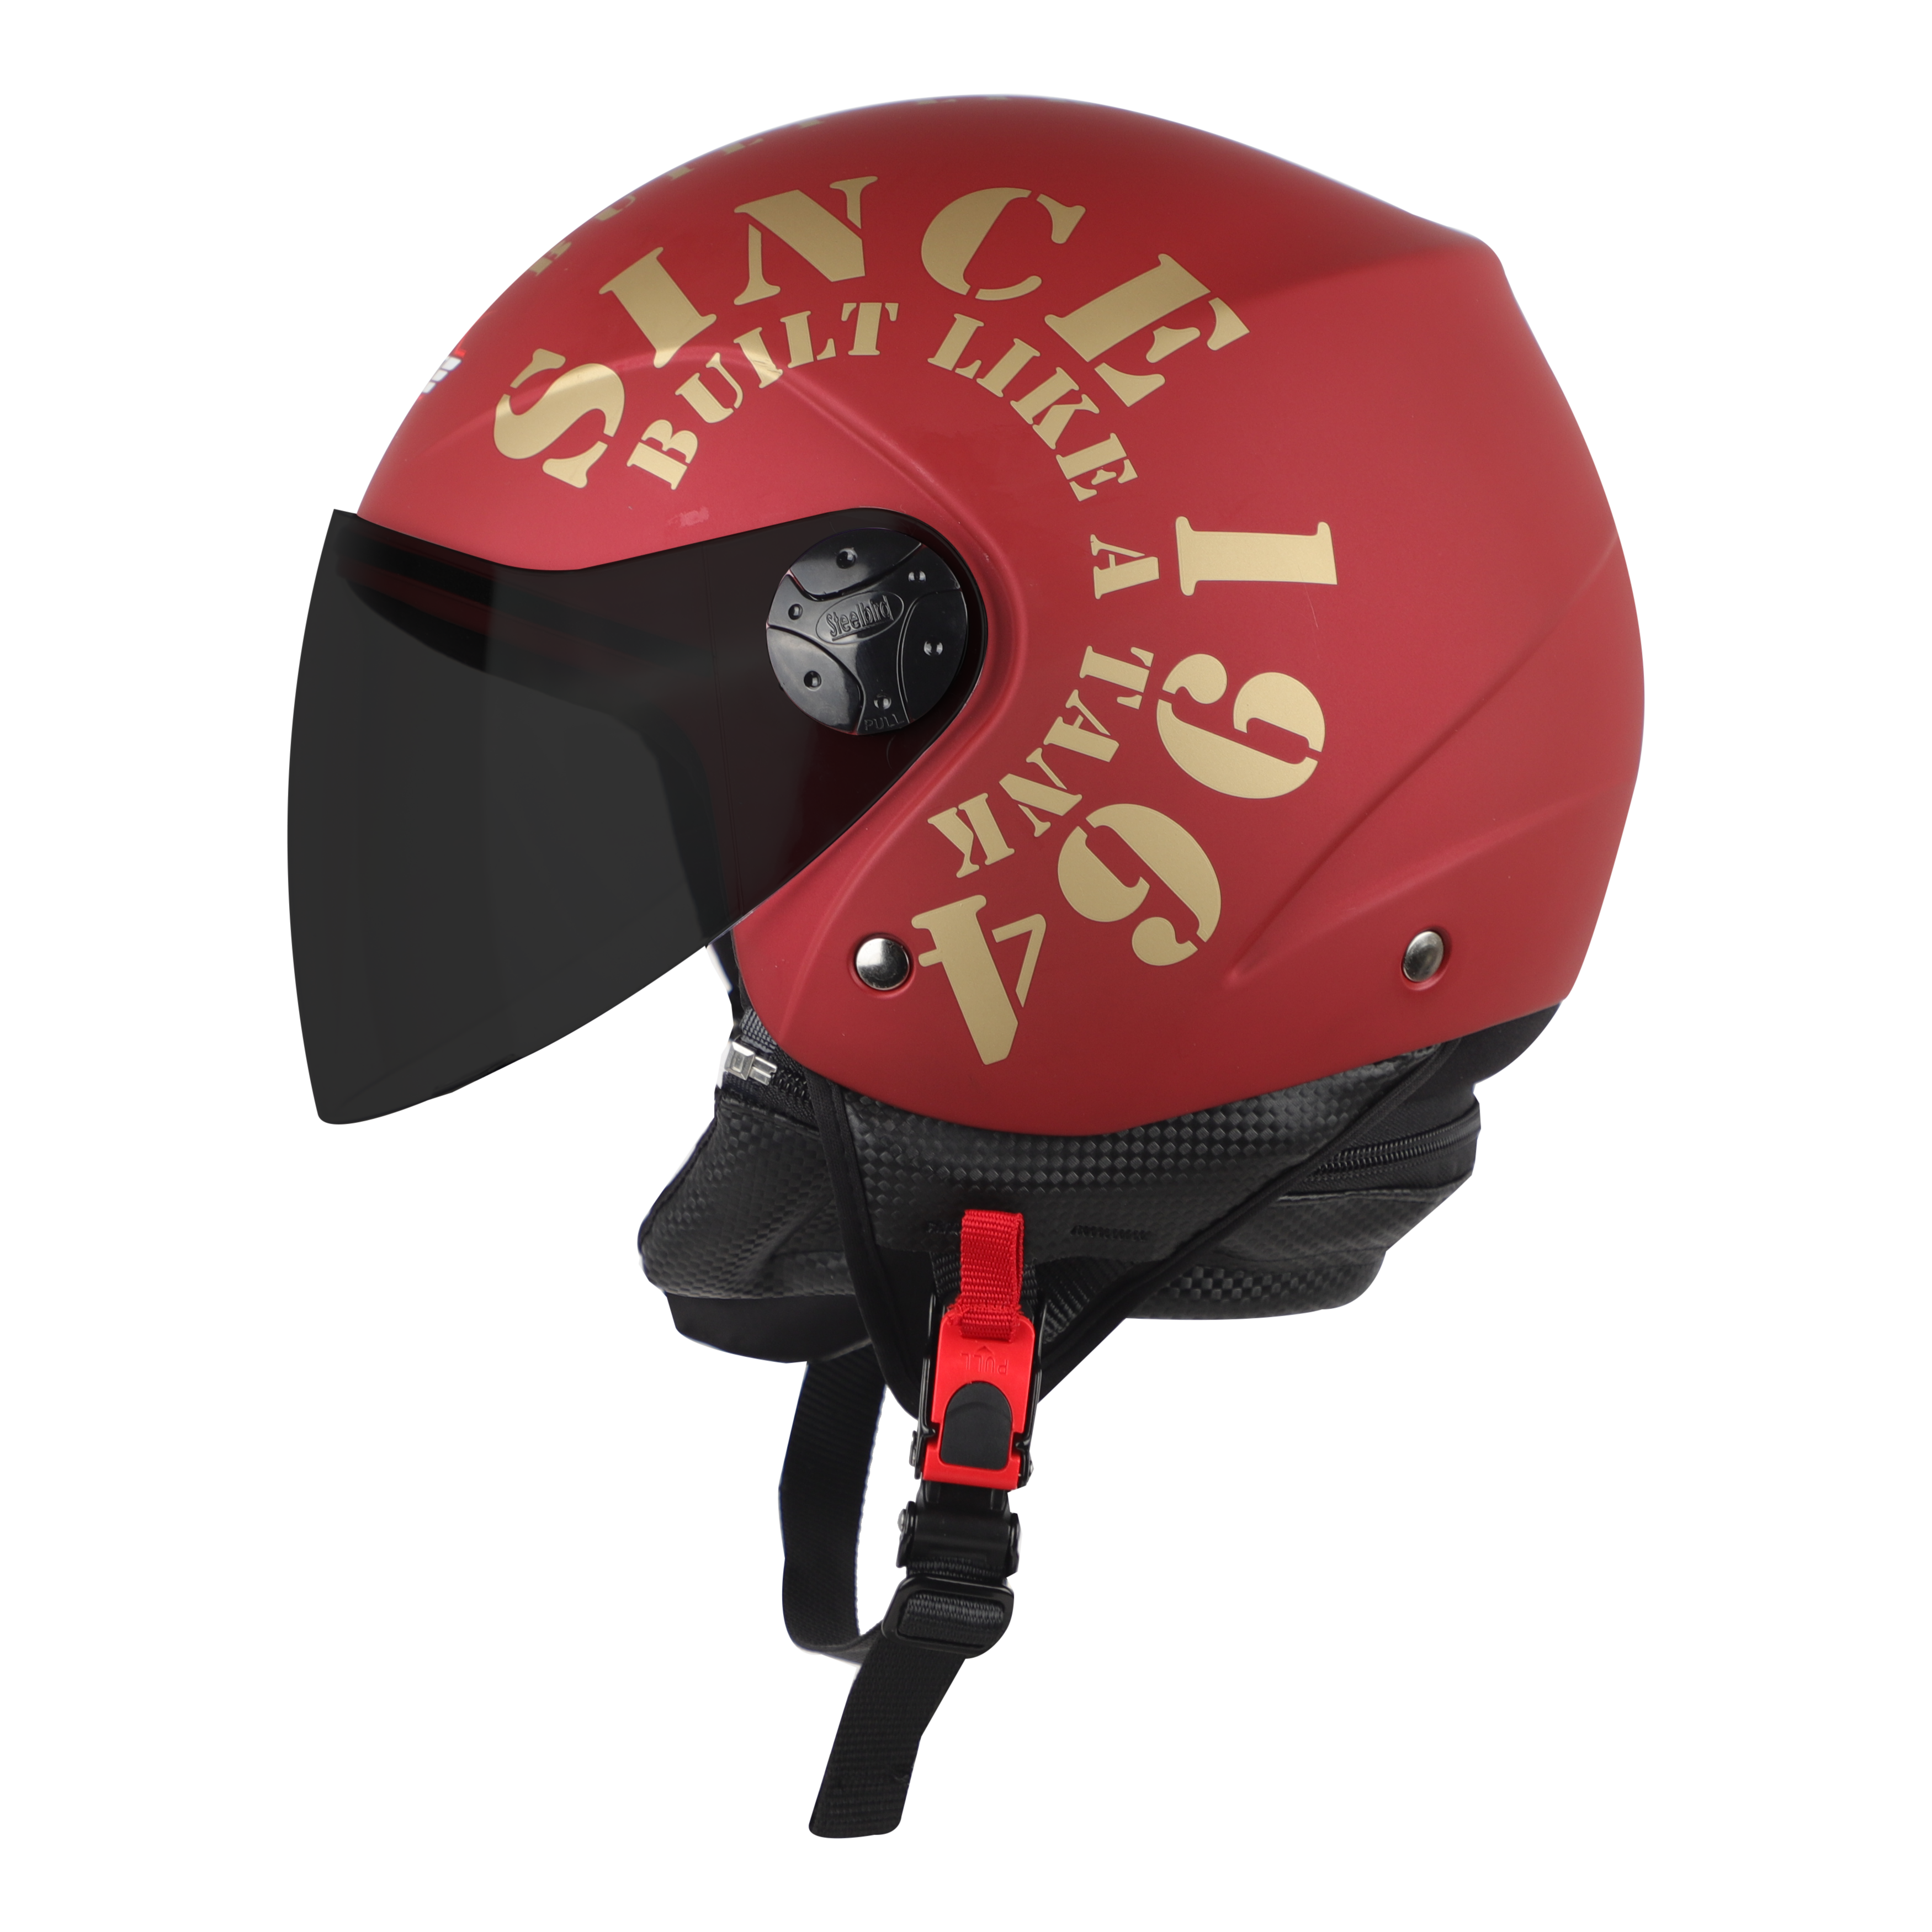 Steelbird SB-02 Tank Full Face ISI Certified Graphic Helmet (Matt Maroon Gold With Smoke Visor)